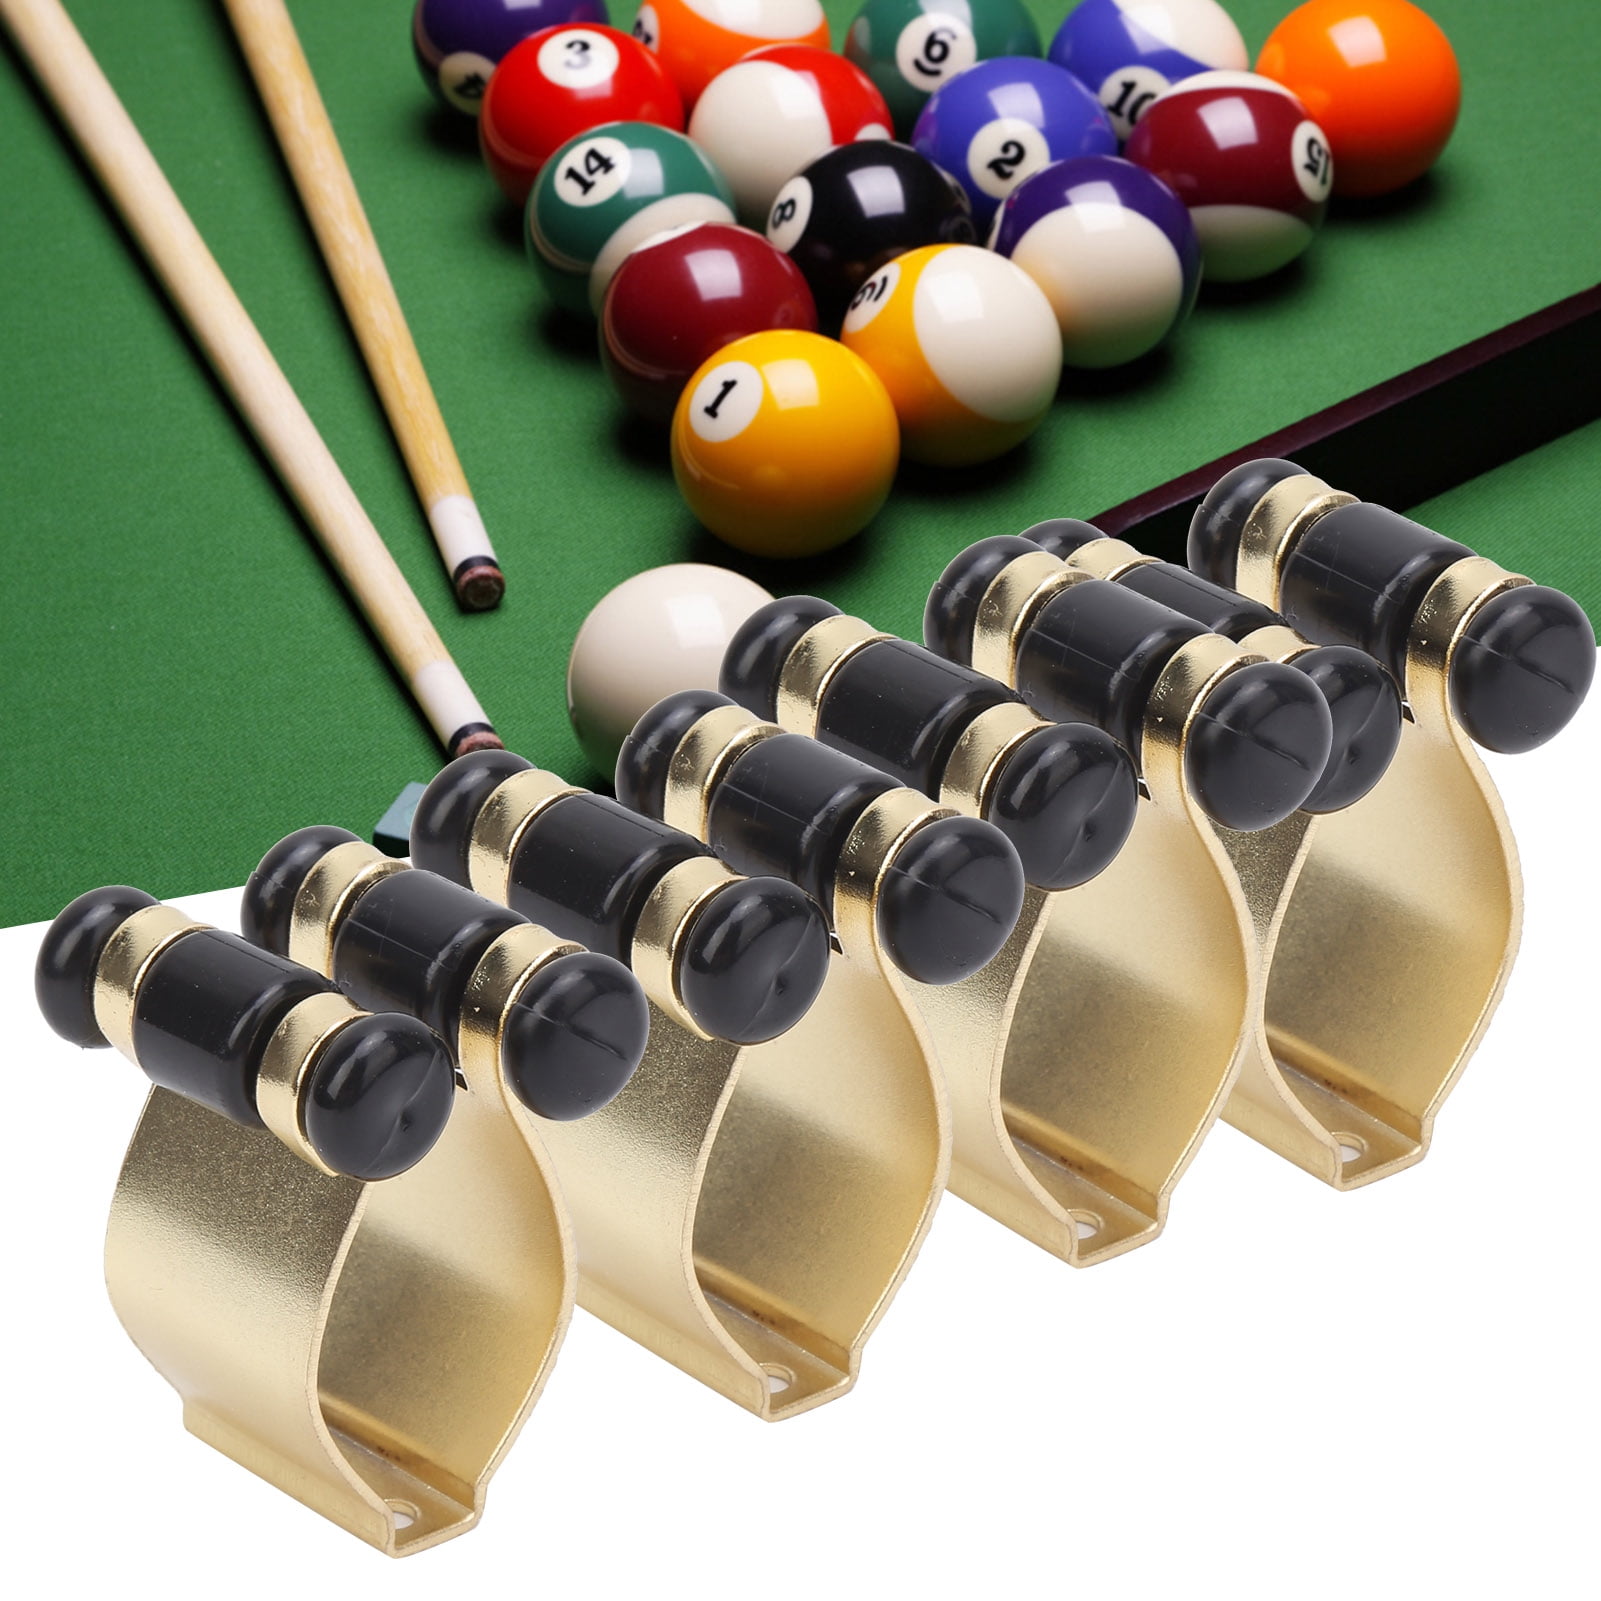 6 Cues Pool Snooker Stick Holder Clips Pool Table Wall Mount Rack Mahogany JI 